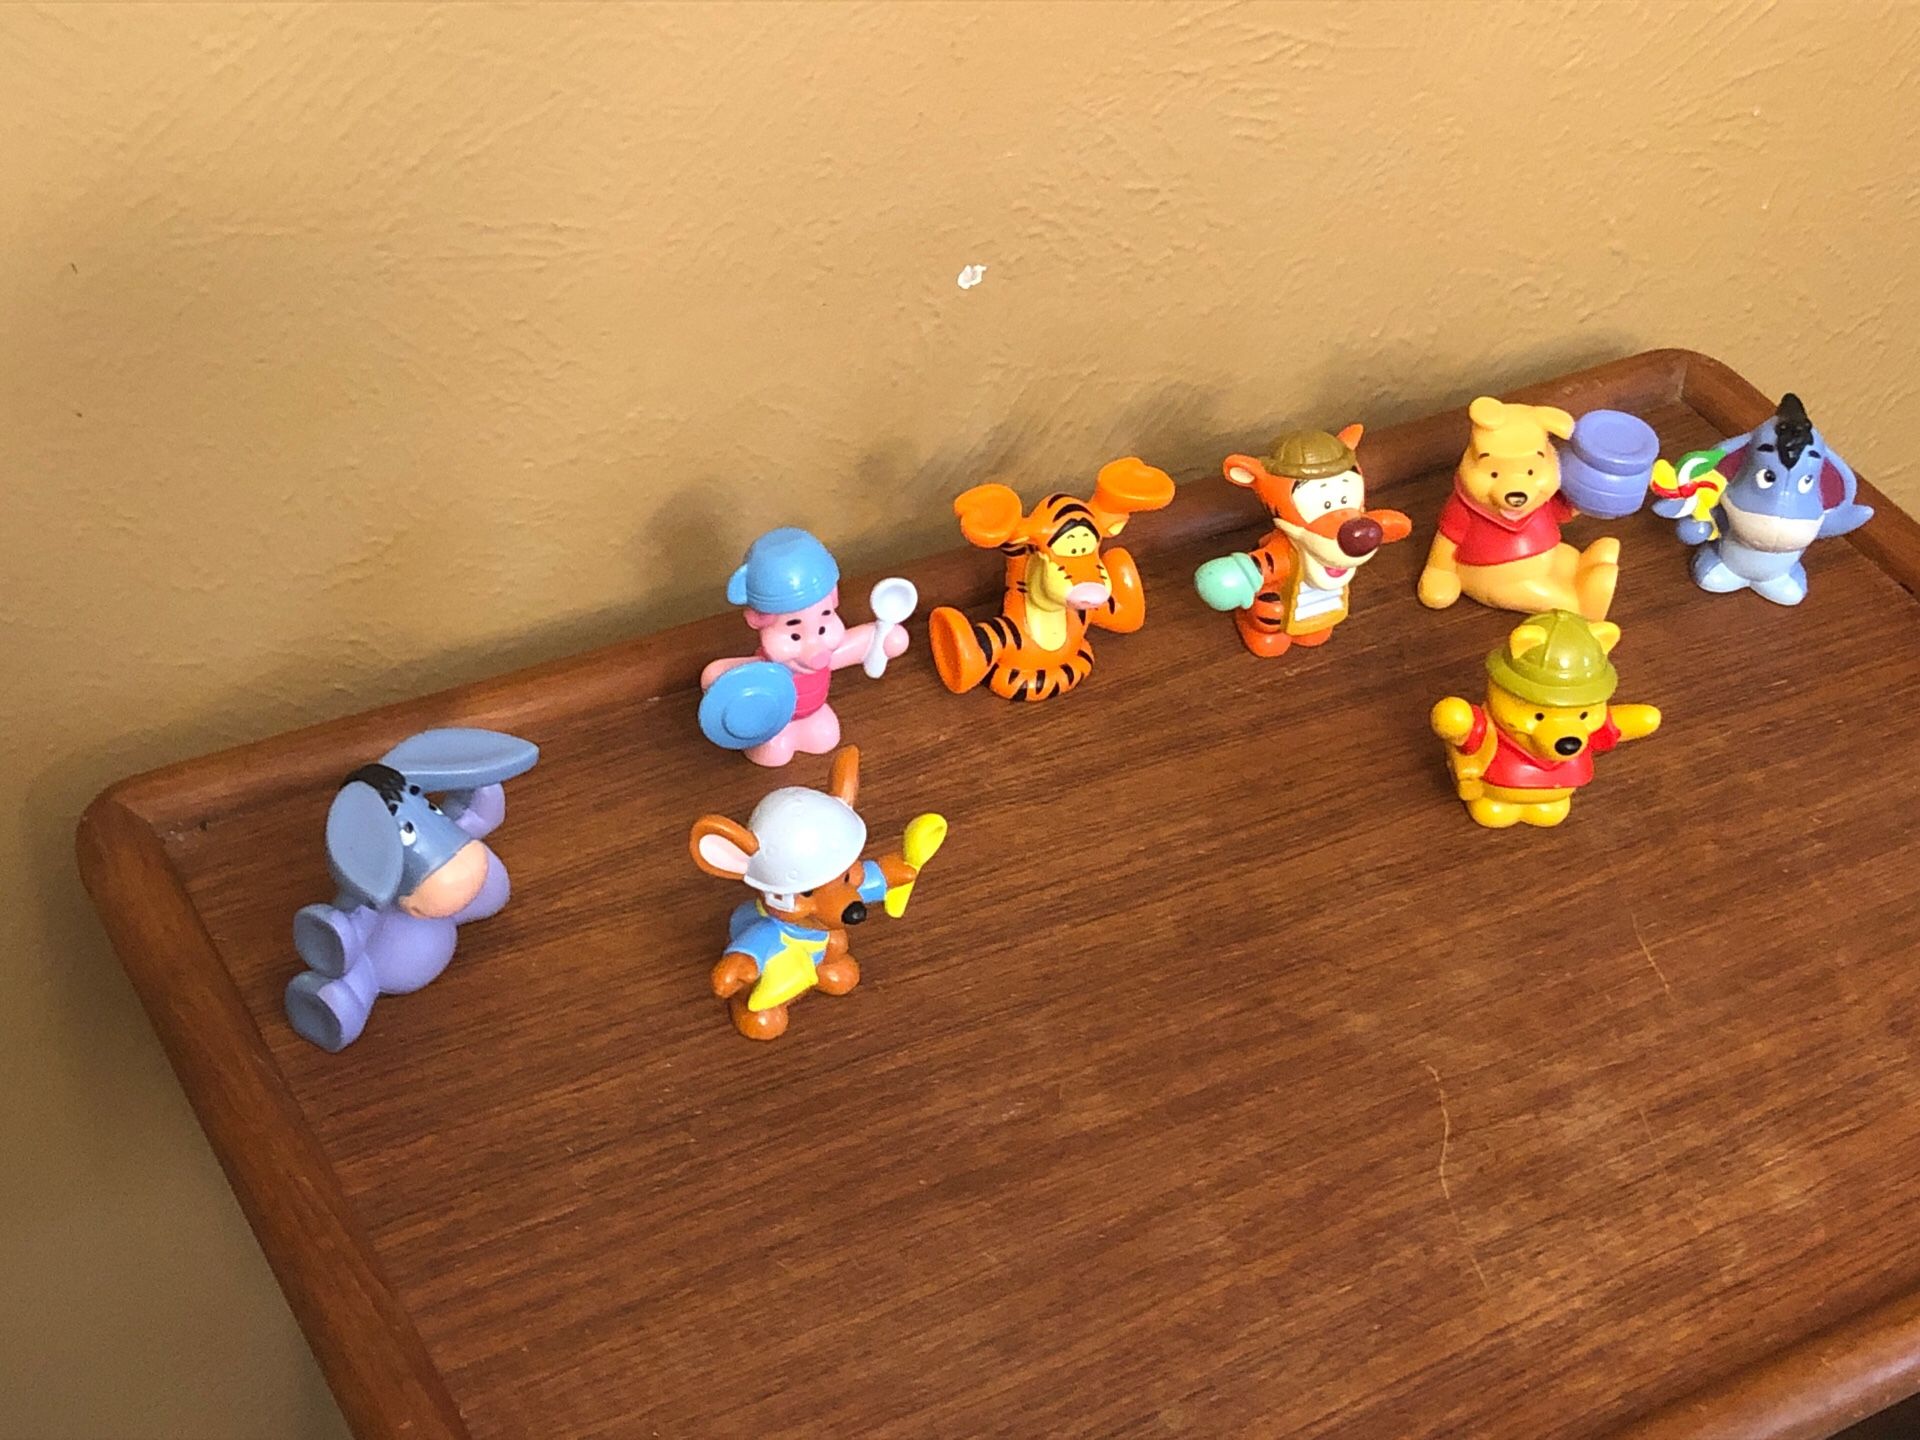 Disney Winnie the Pooh figurines